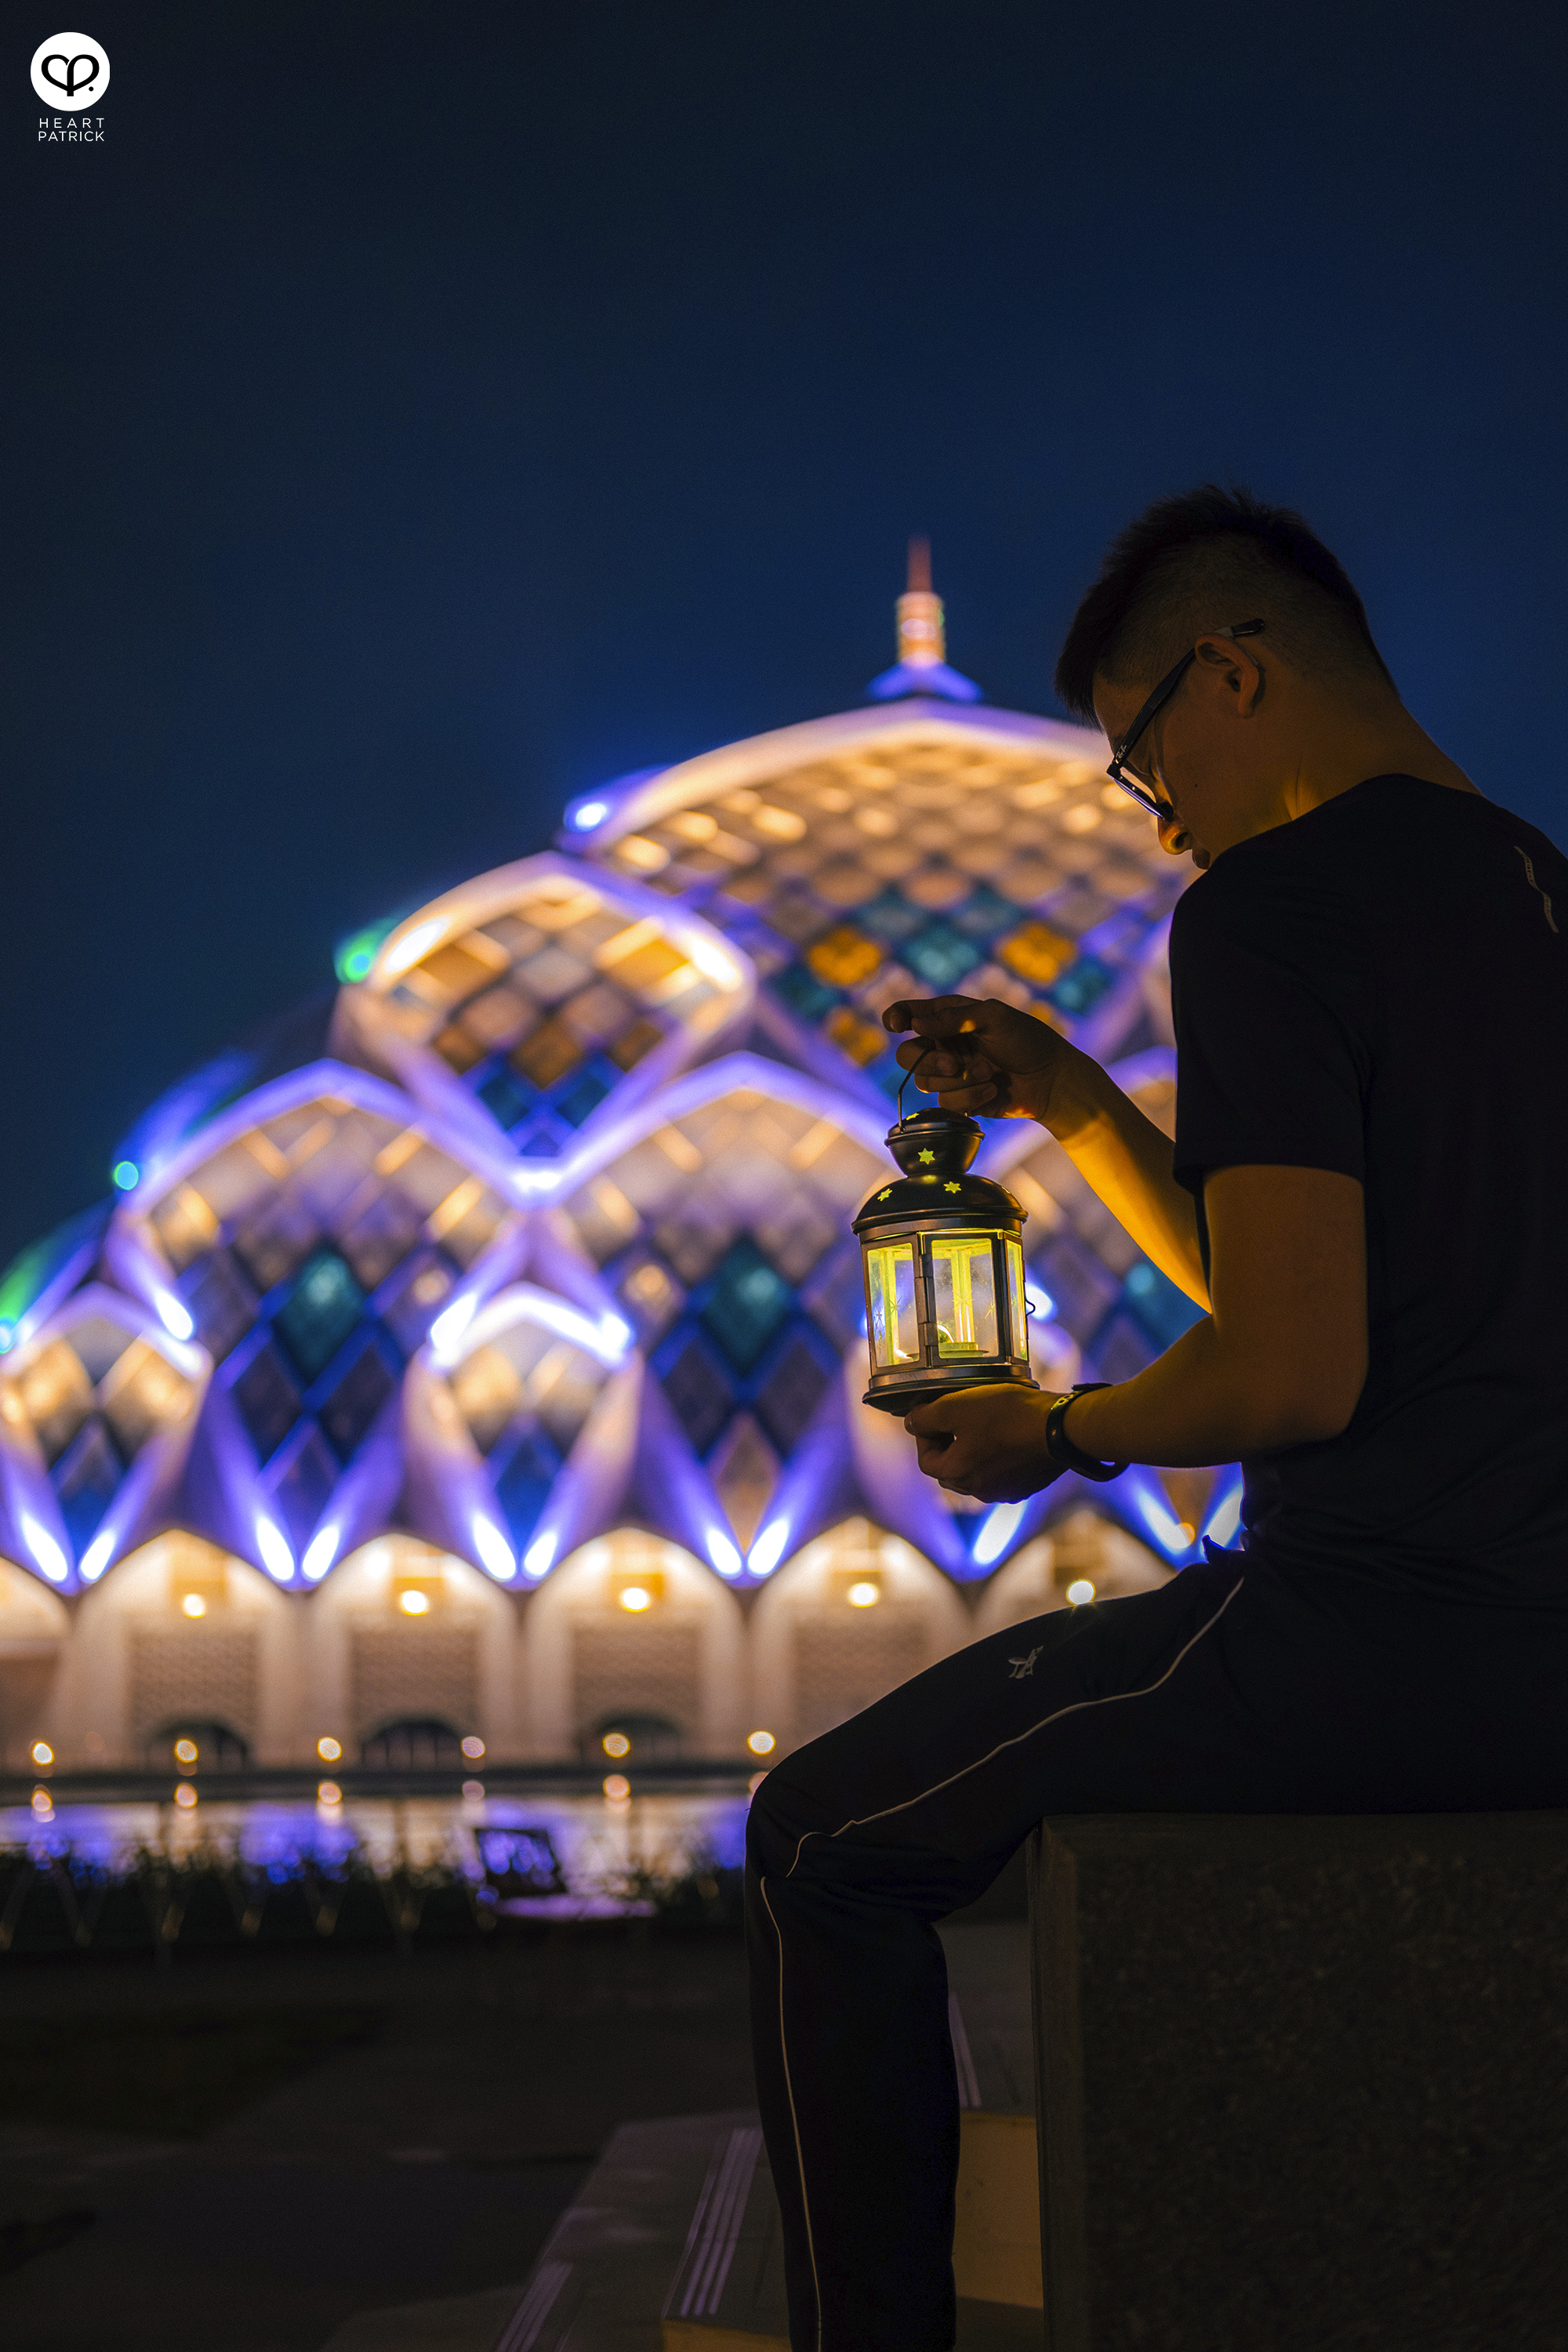 heartpatrick travel architecture photography al jabbar grand mosque bandung indonesia